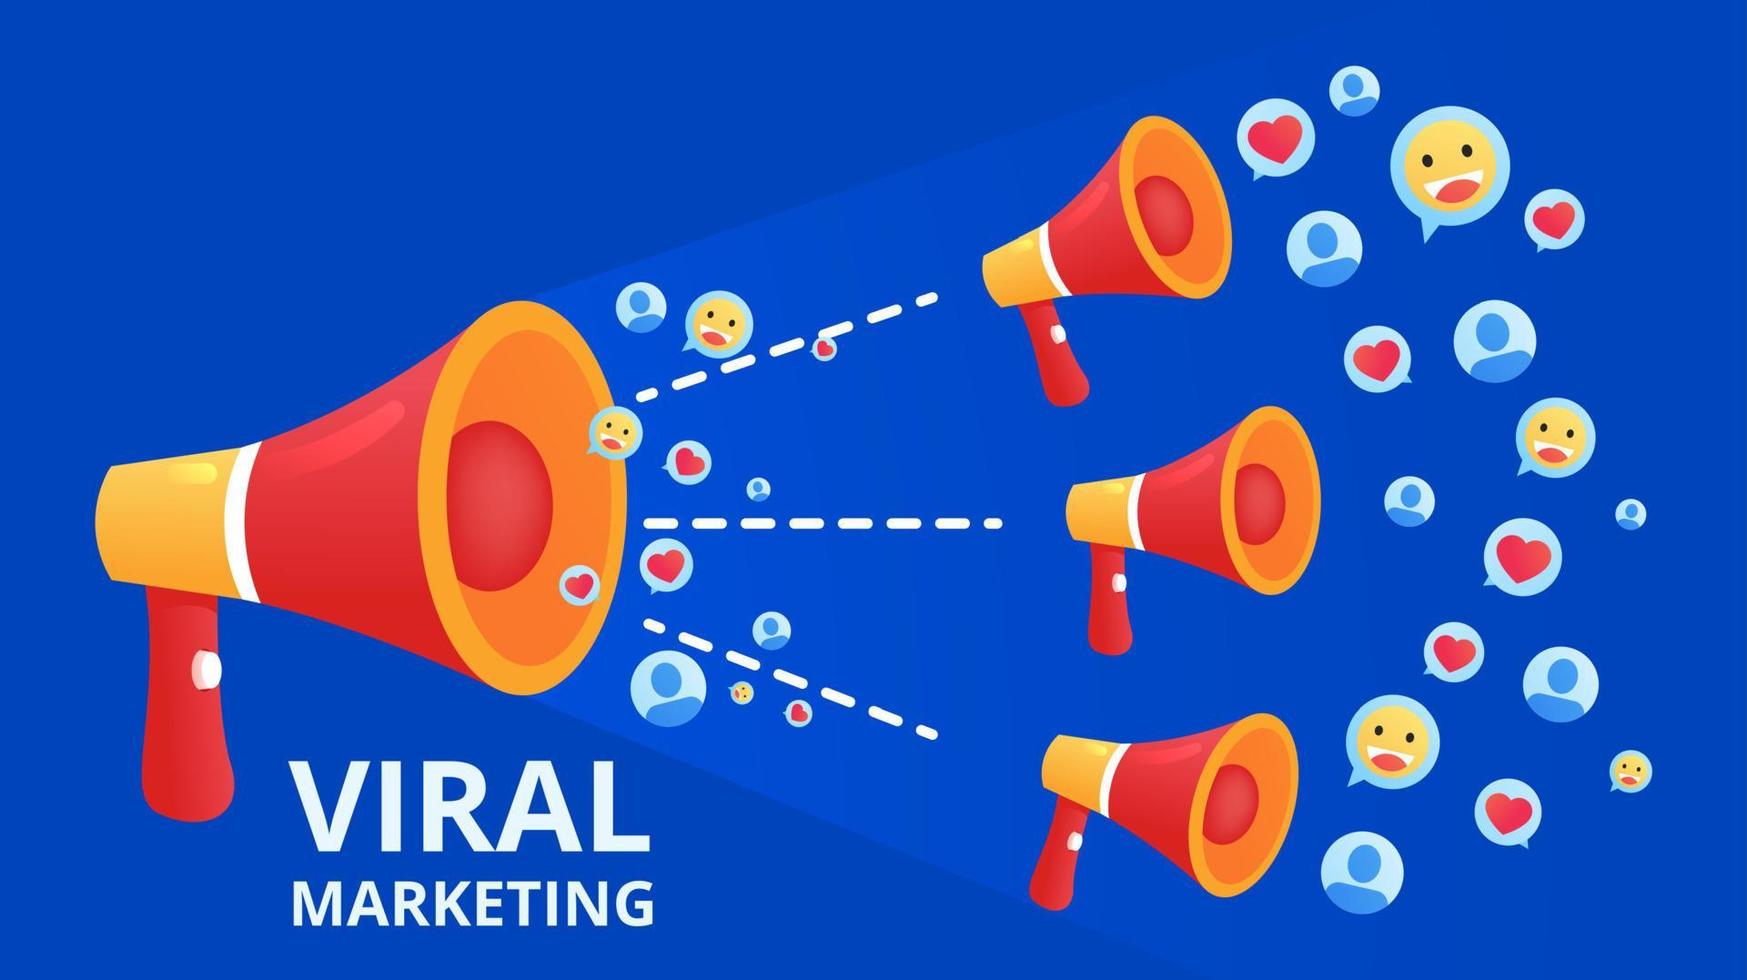 Viral marketing for concept design. Business illustration. Social media vector banner.